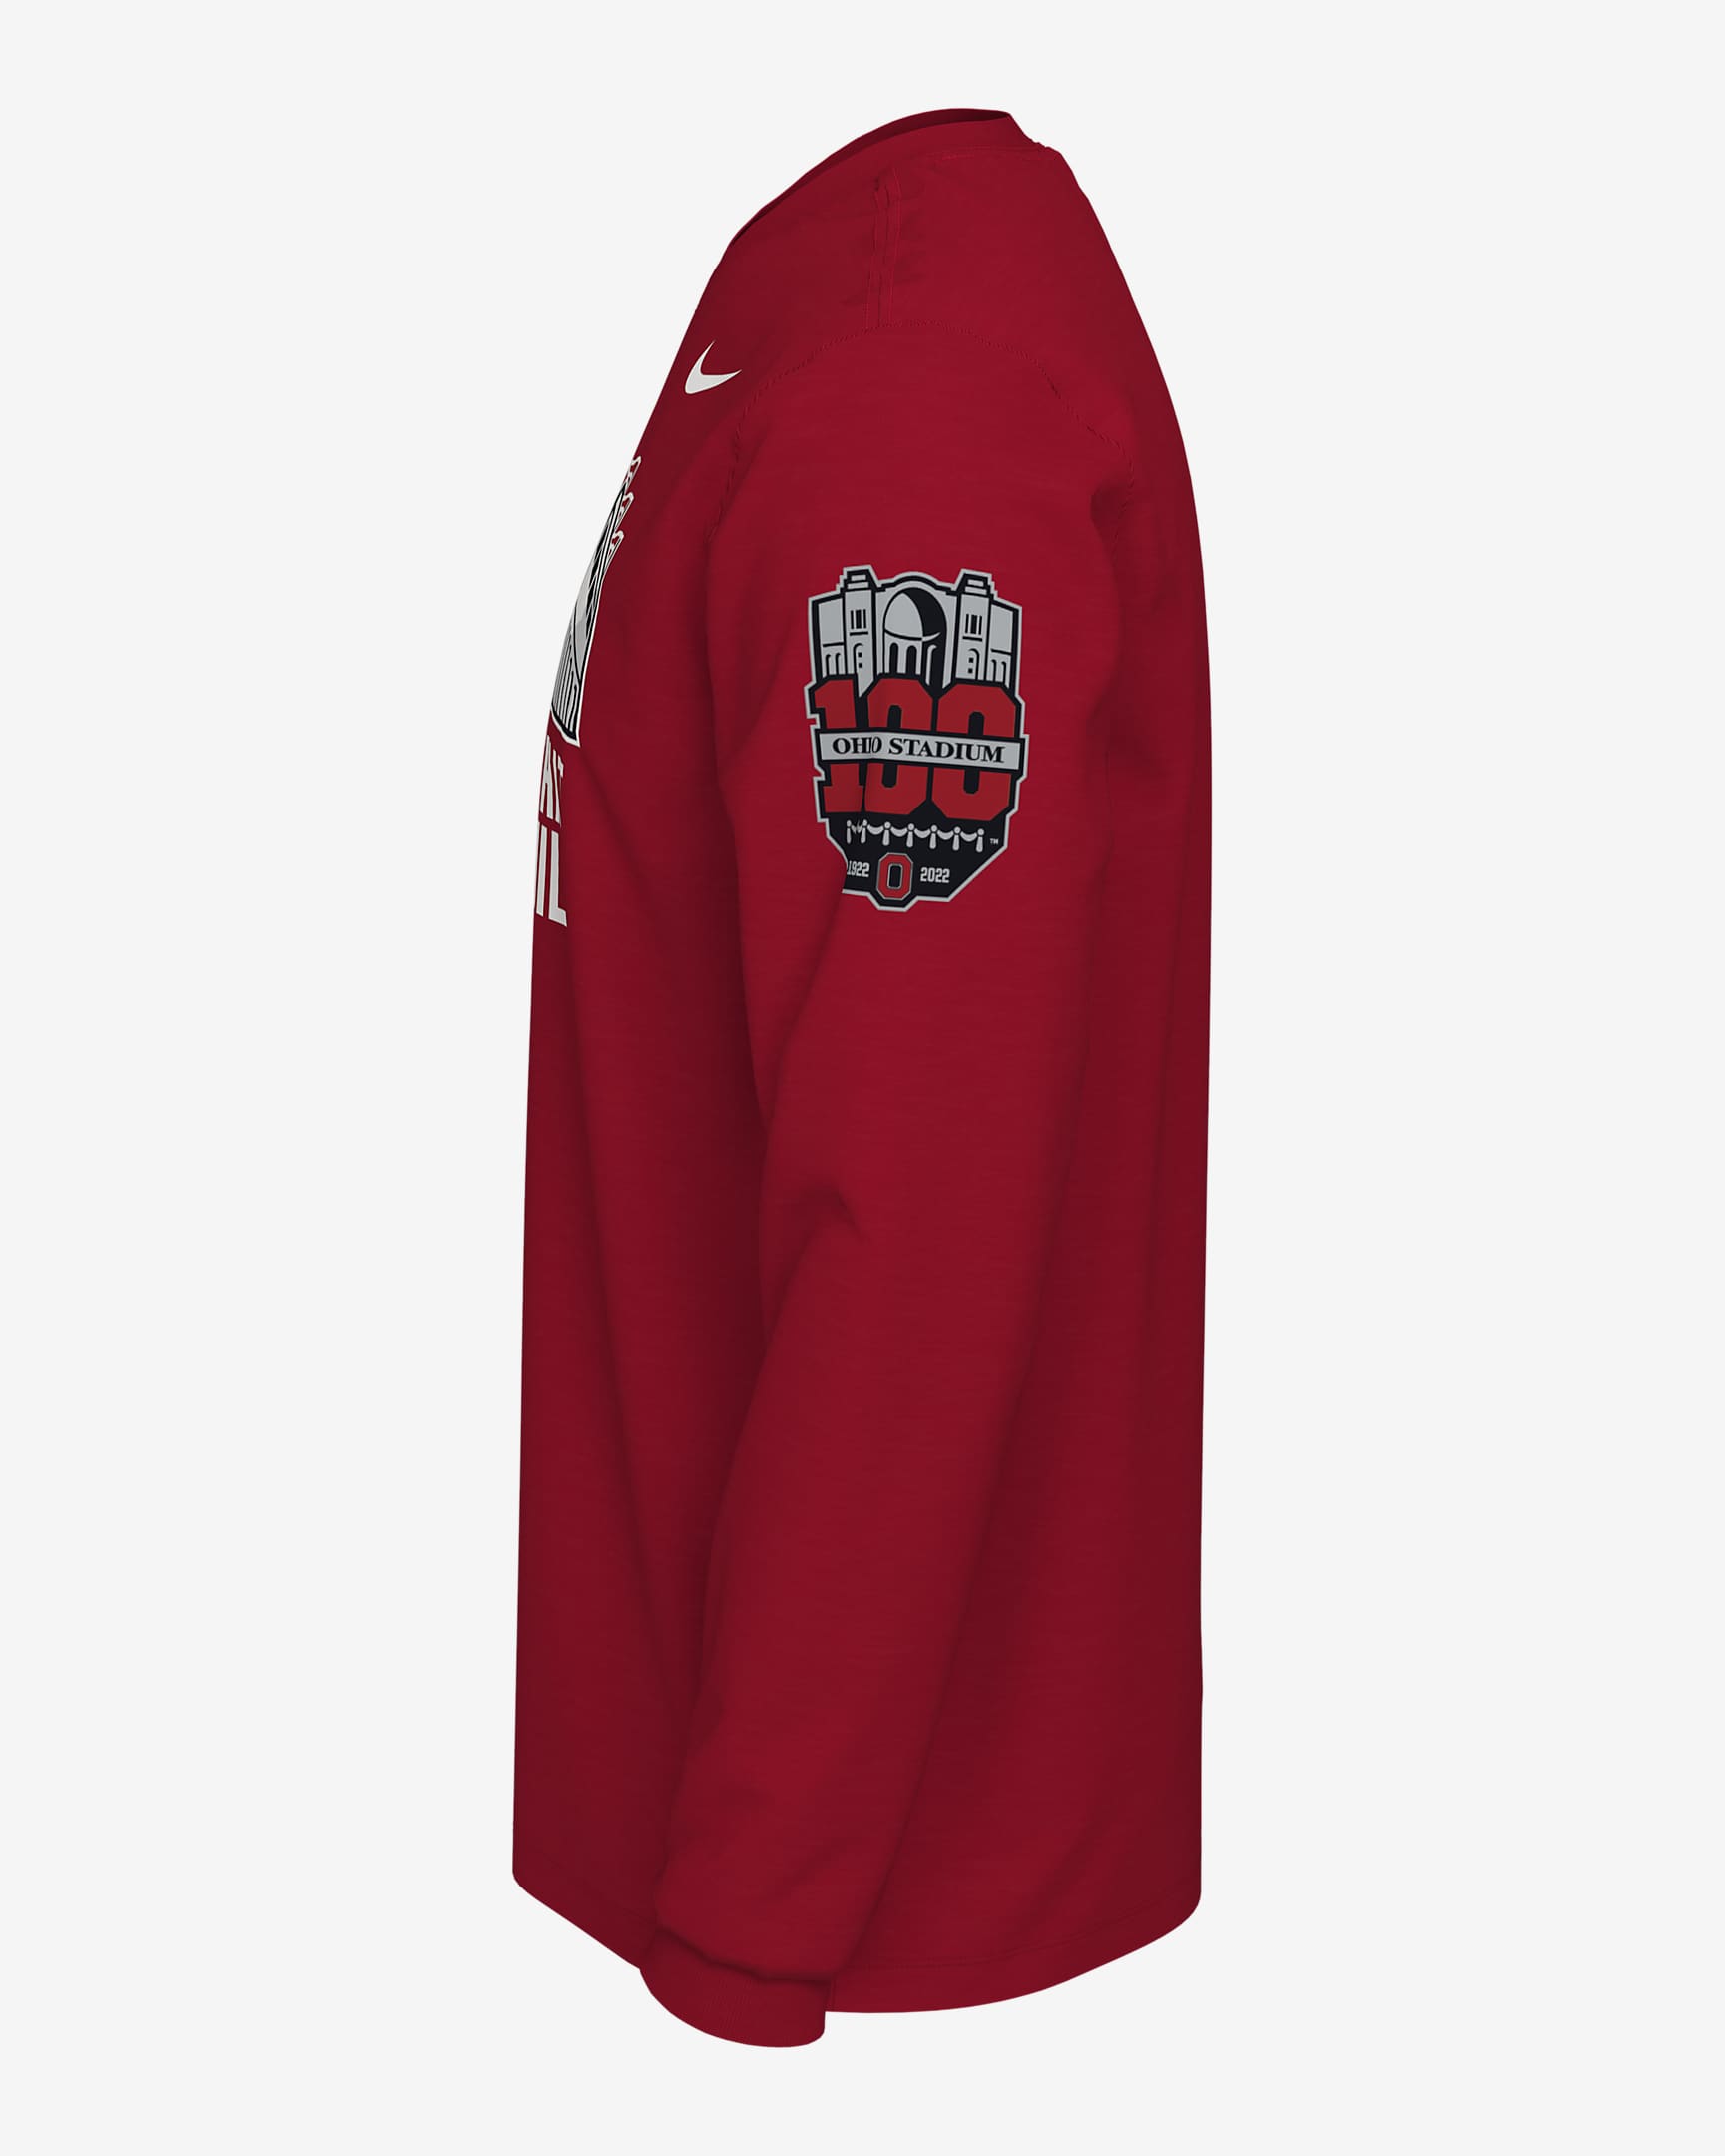 Nike College (Ohio State) Men's T-Shirt. Nike.com